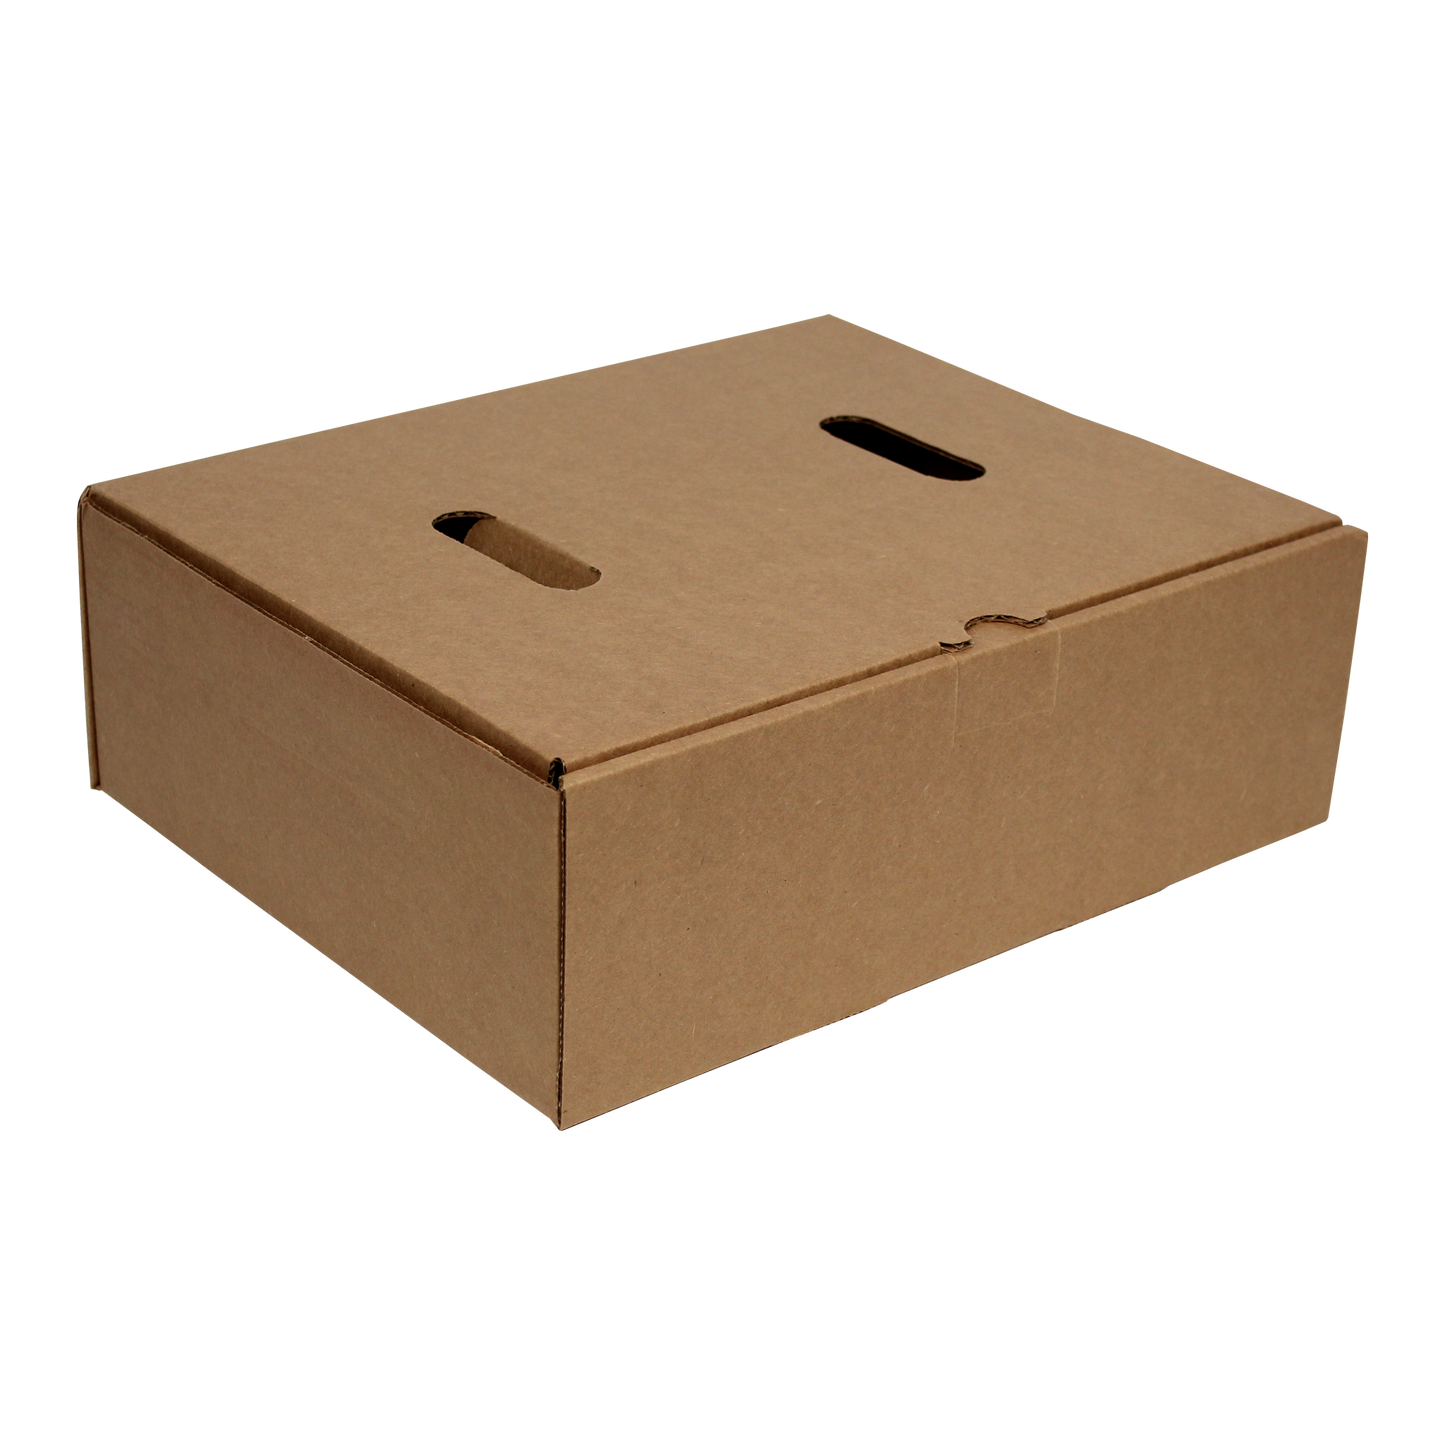 Saf-T-Pak® STP-342 - Replacement Inner Box for STP-340 ( UN 3373), 25/Case